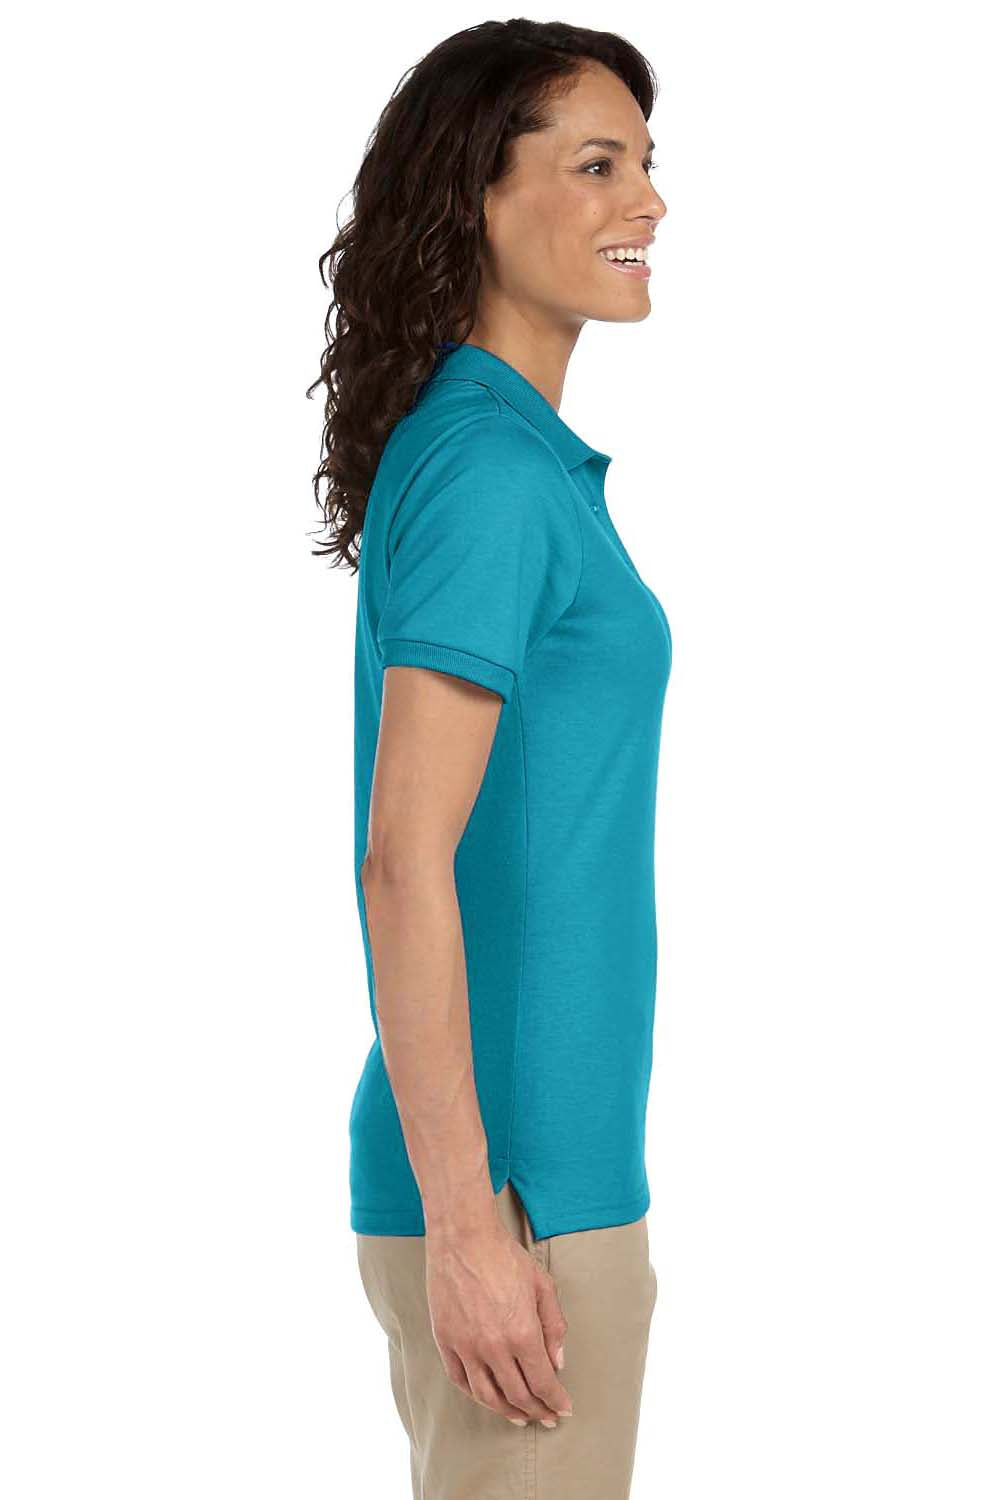 Jerzees 437W Womens SpotShield Stain Resistant Short Sleeve Polo Shirt California Blue Side